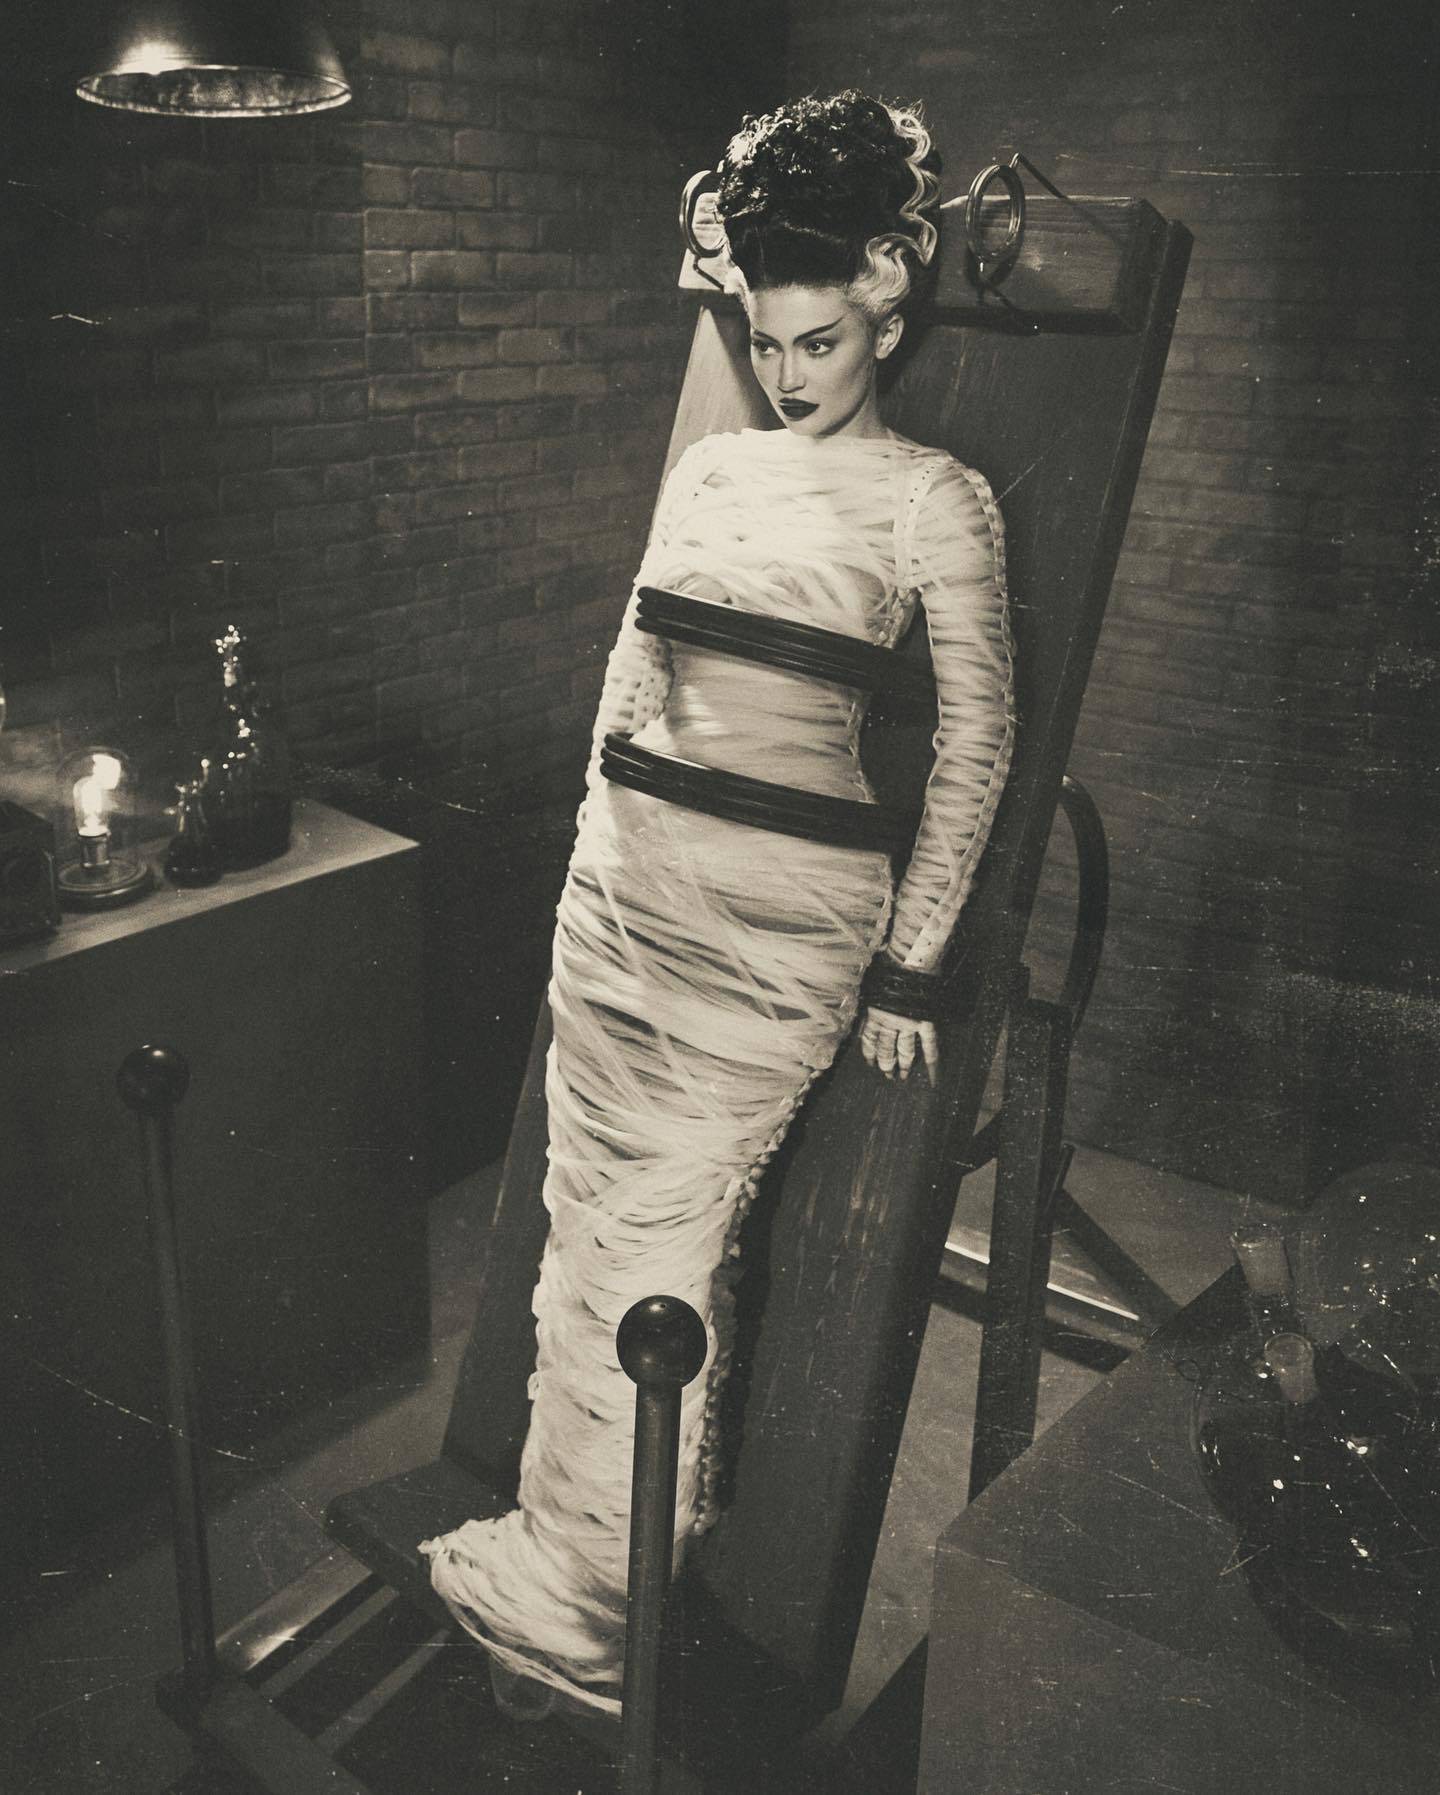 Kylie Jenner dresses up as the Bride of Frankenstein. Photo: Kylie Jenner / Instagram